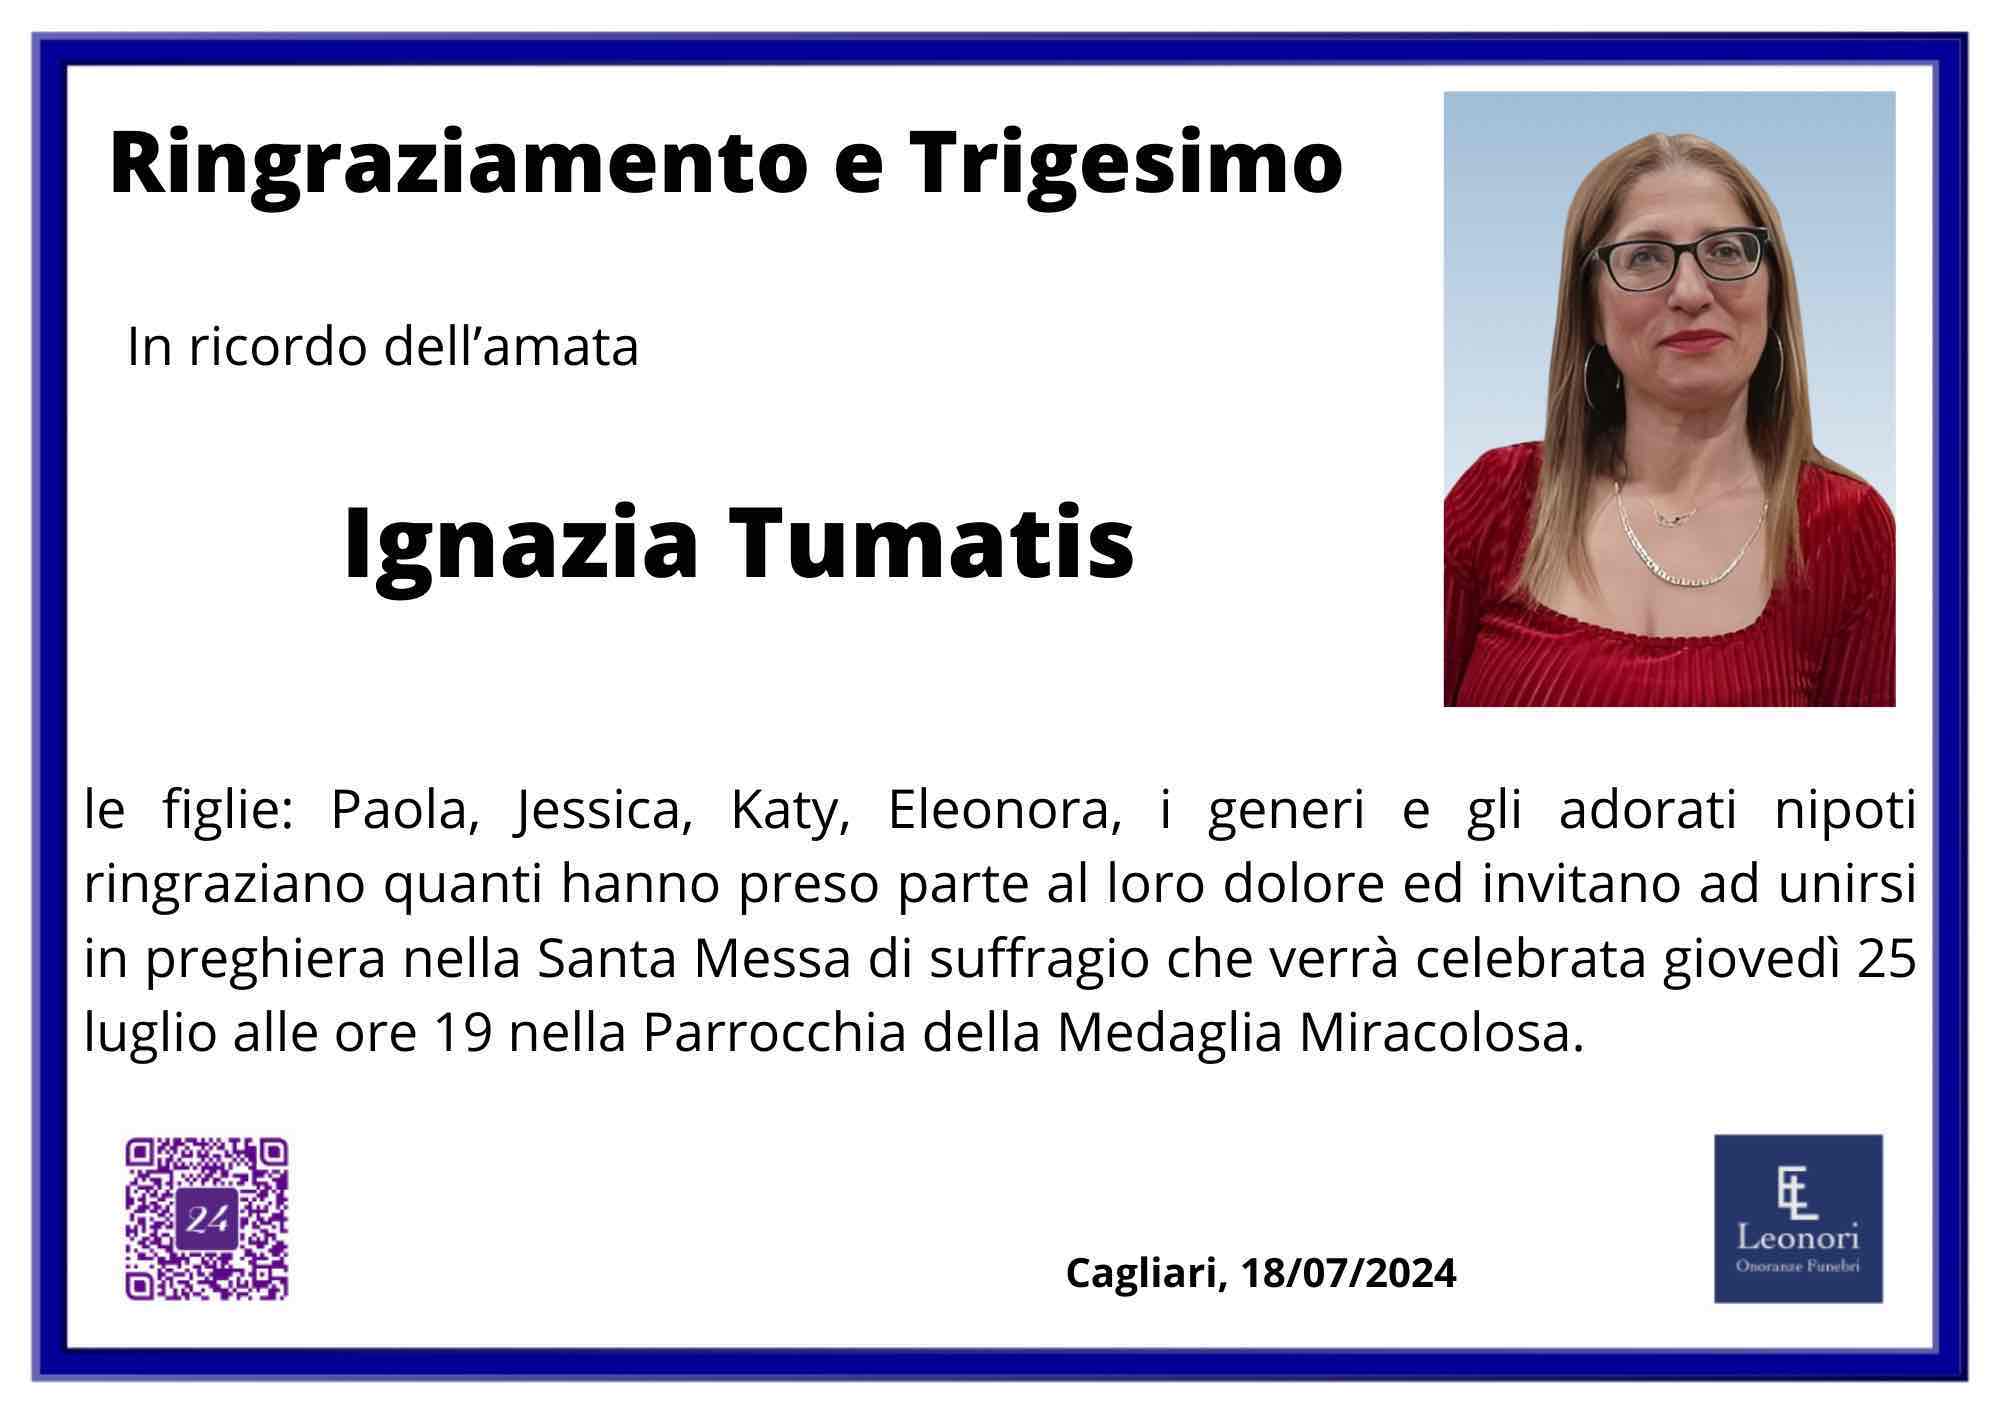 Ignazia Tumatis